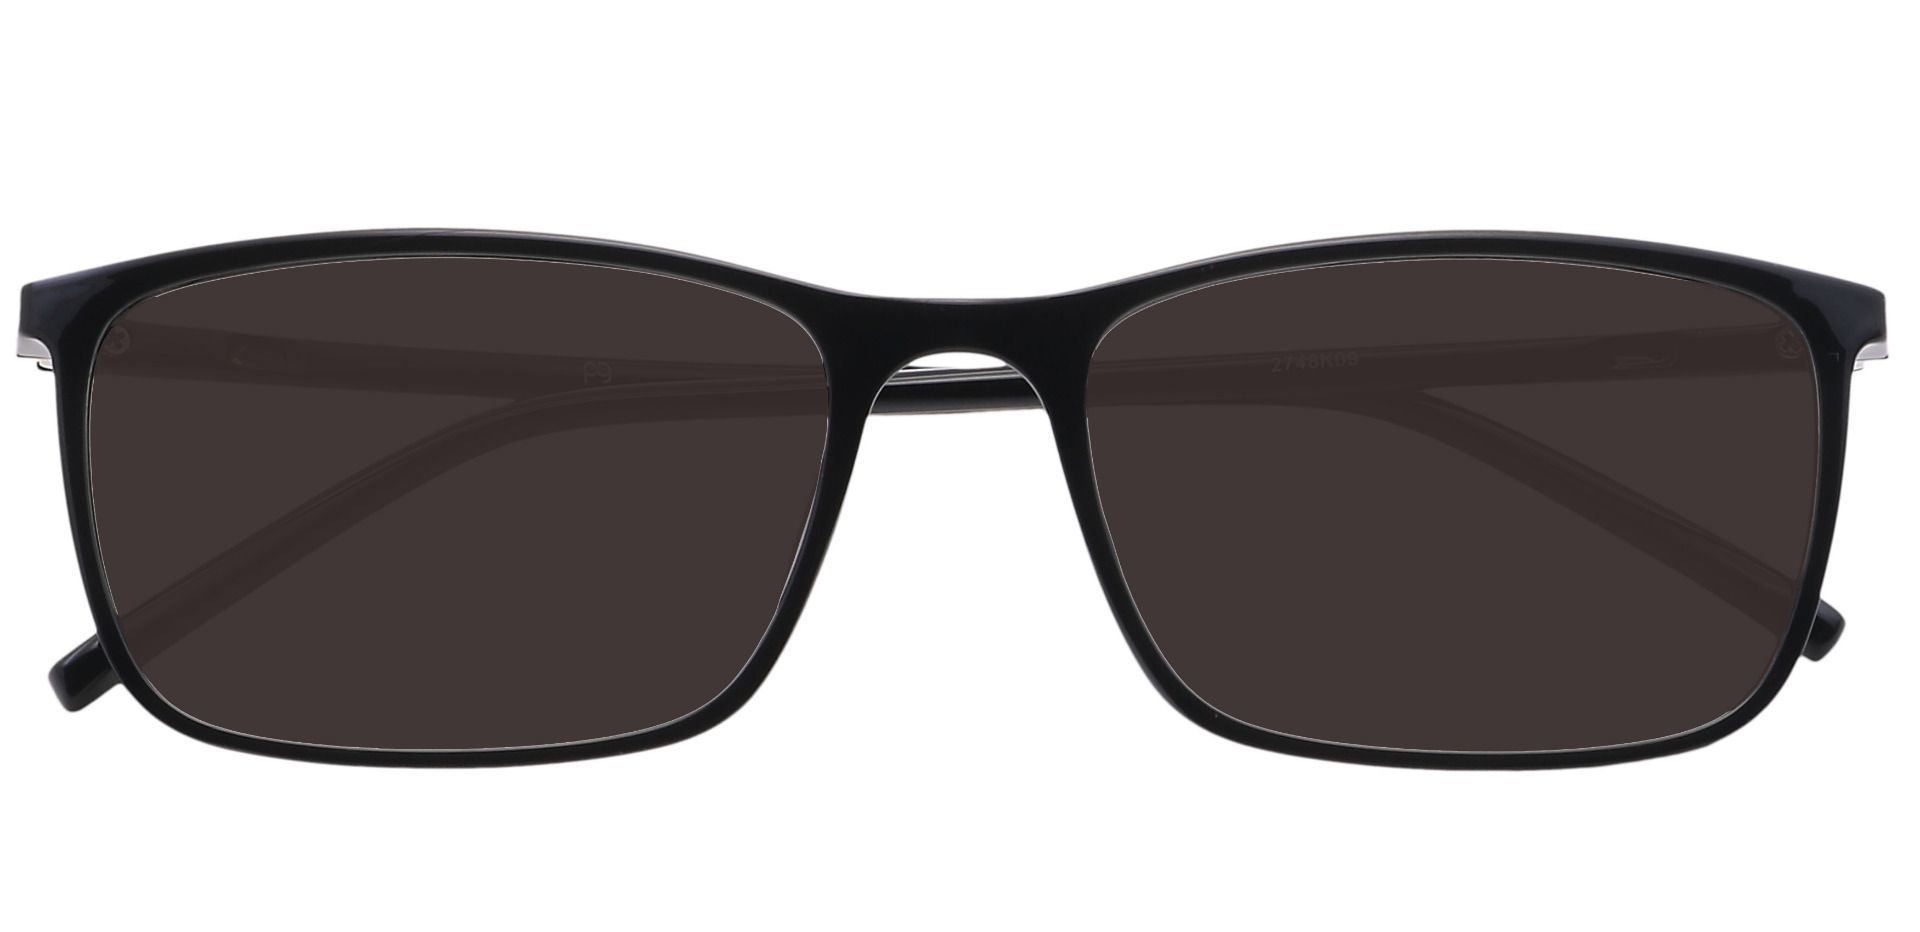 Fuji Rectangle Non-Rx Sunglasses - Black Frame With Gray Lenses